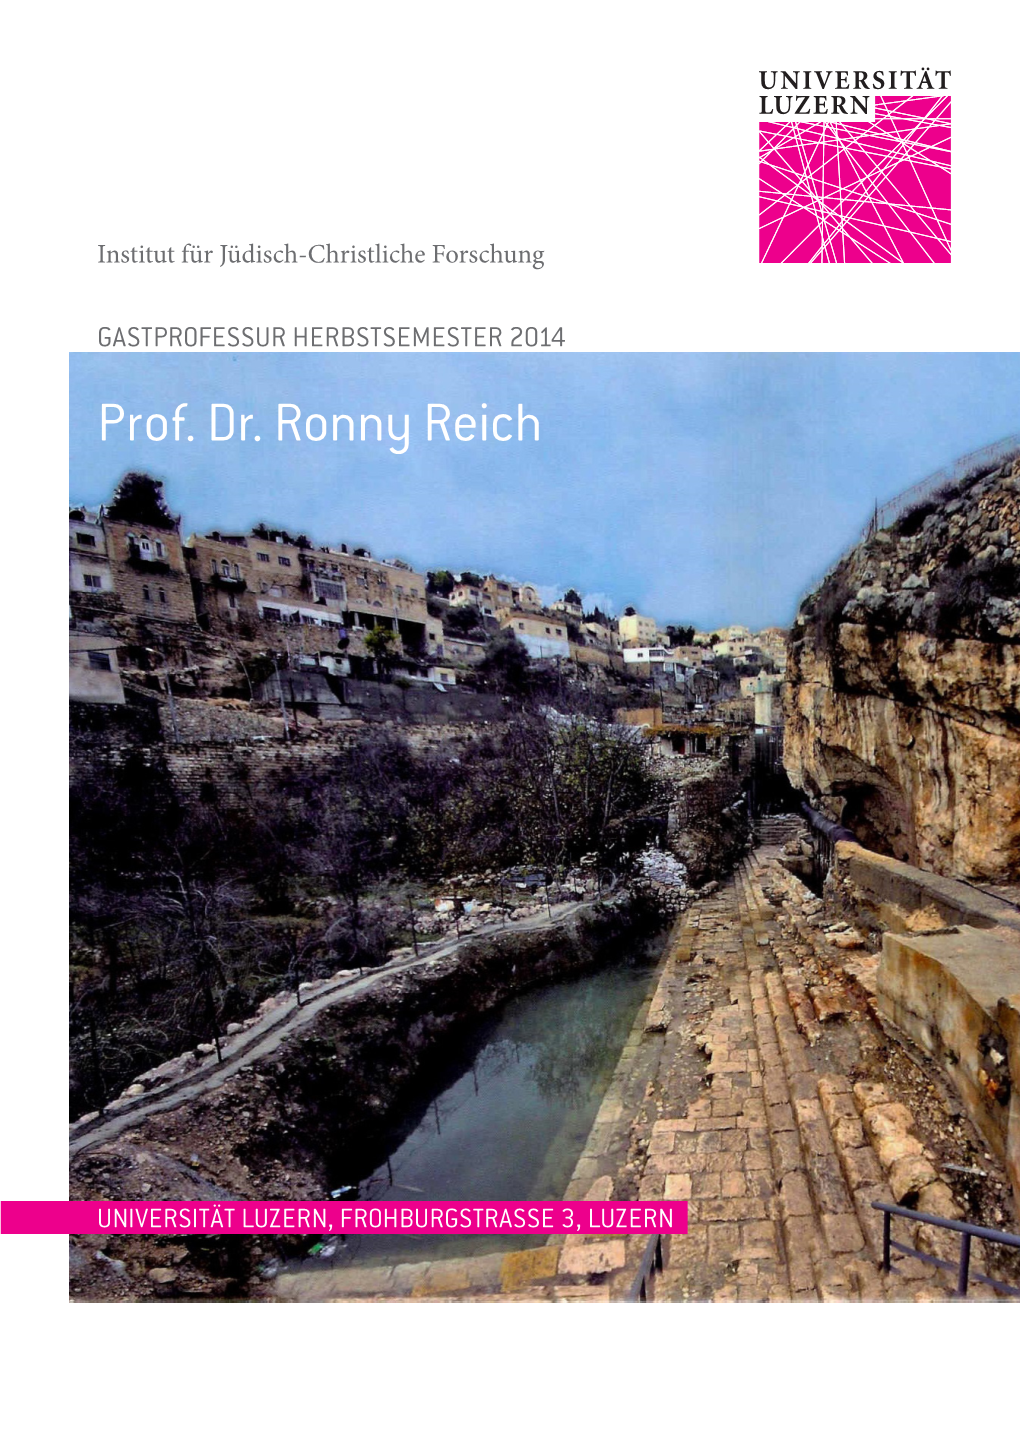 Prof. Dr. Ronny Reich